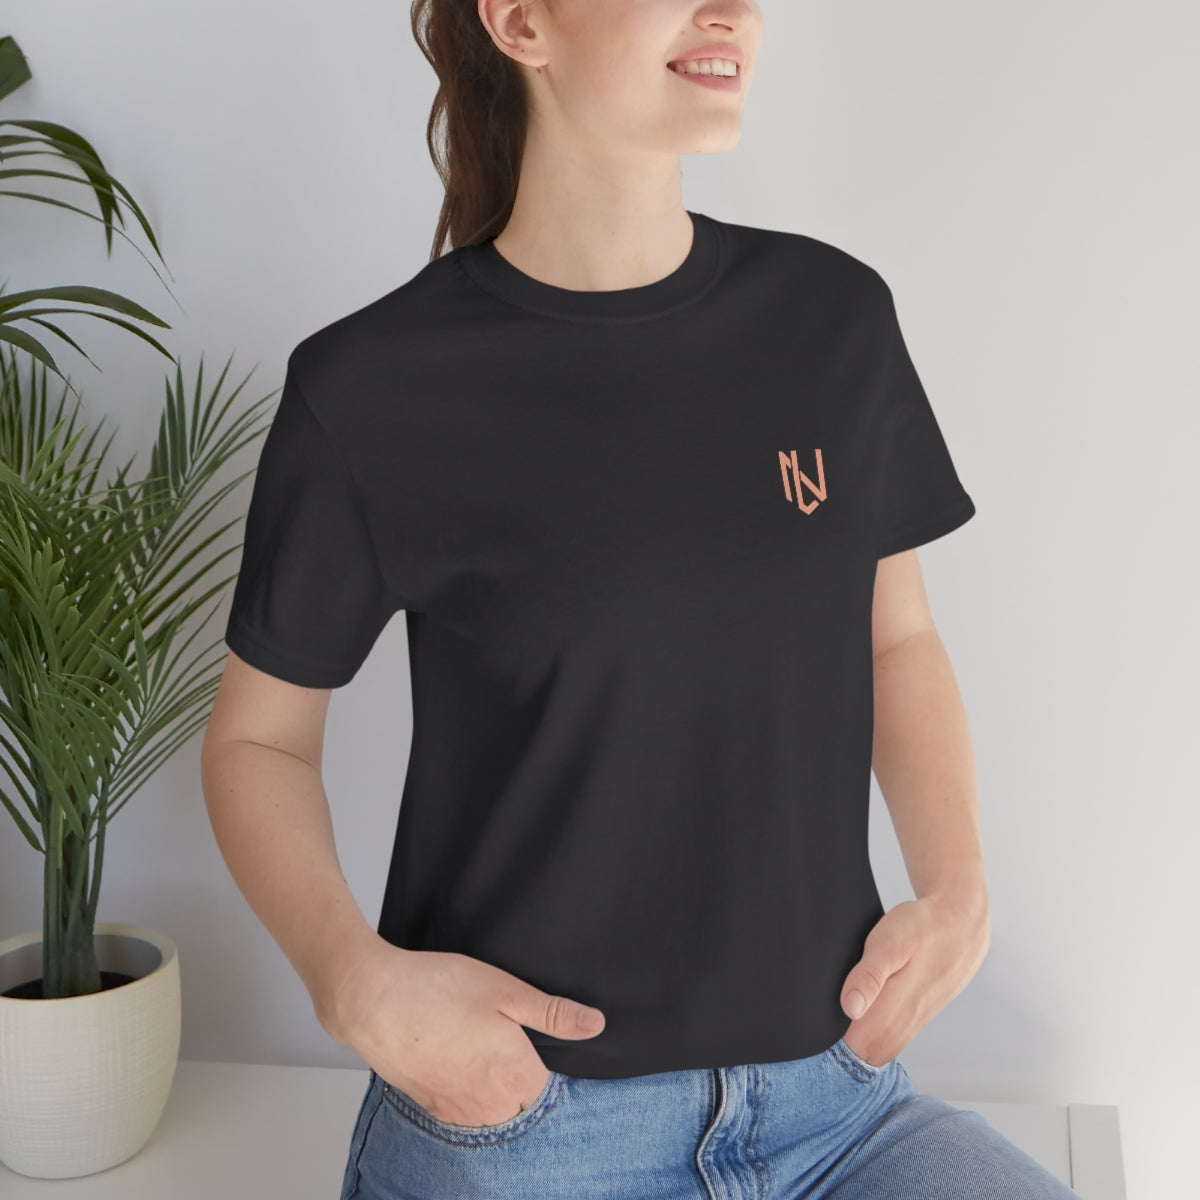 Vibes O' Clock Unisex Shirt (Peach)